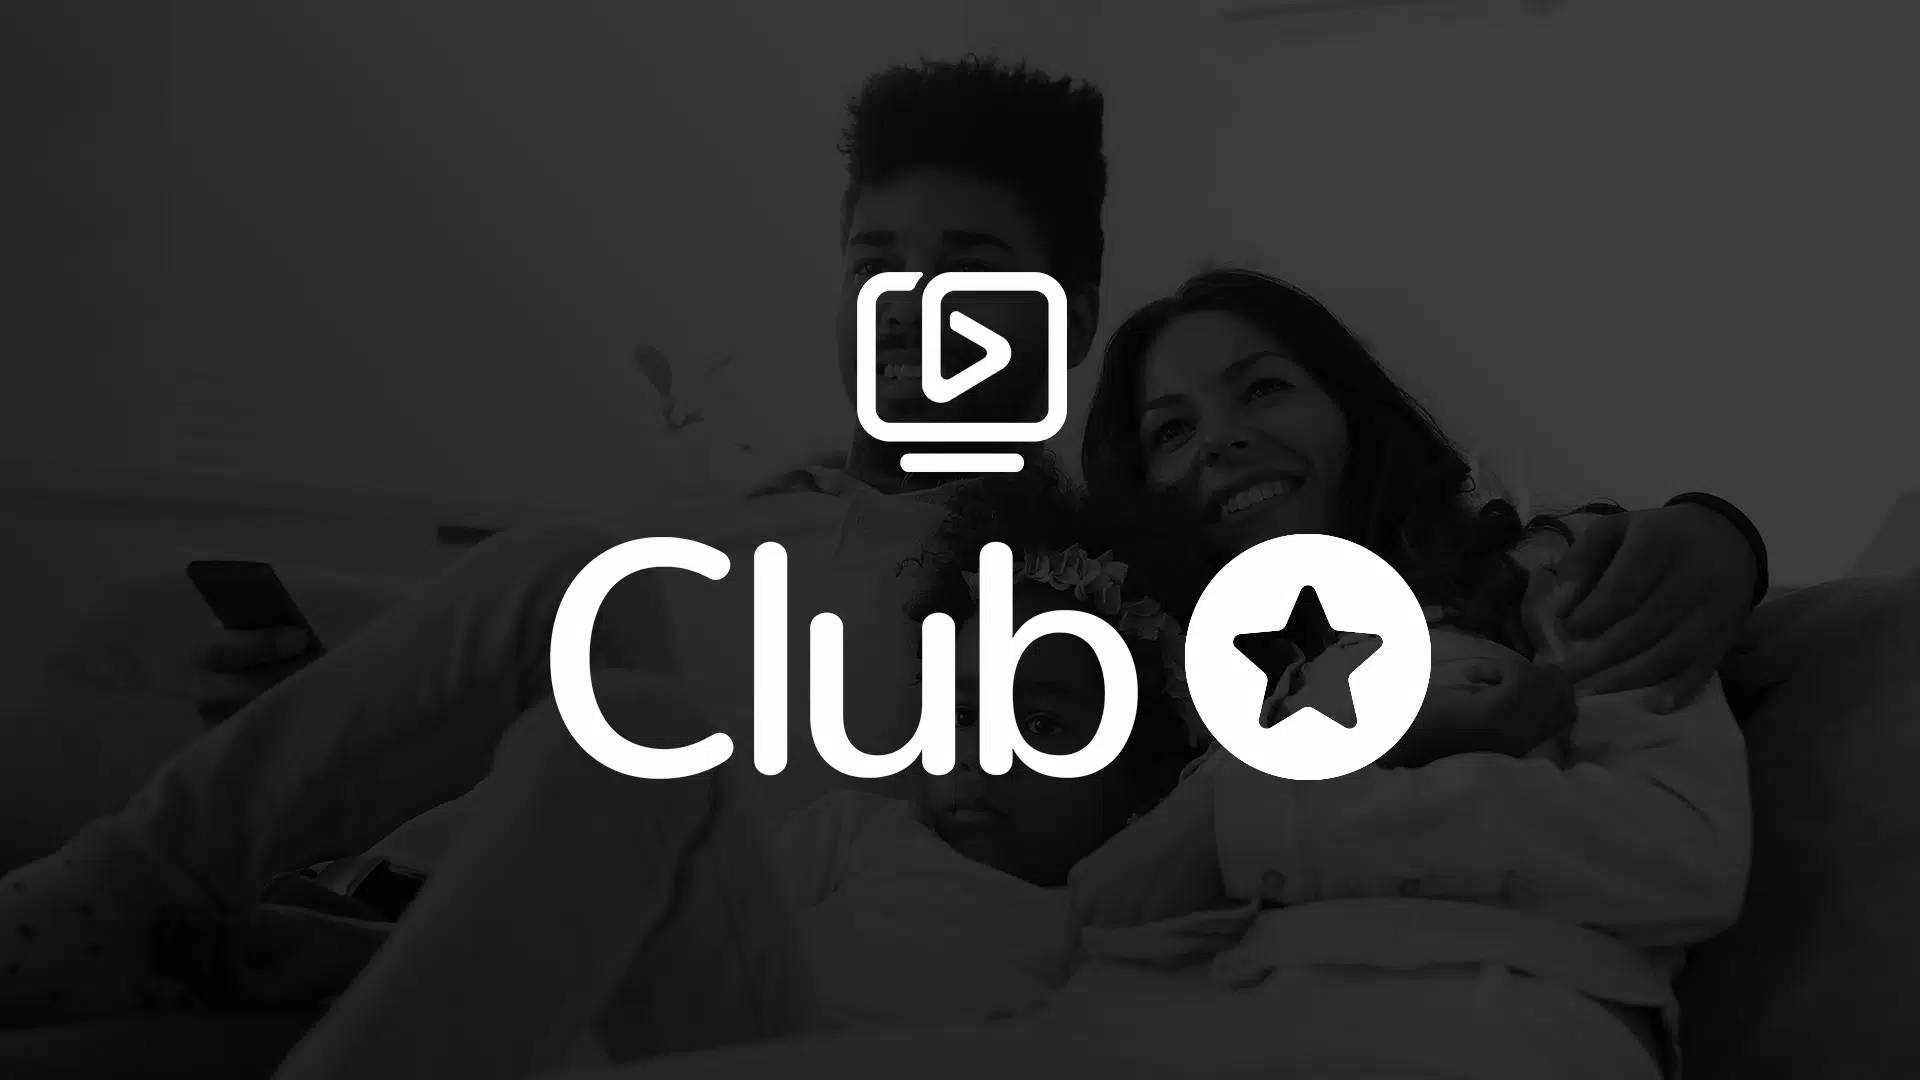 club Smart APK (Android App) - Baixar Grátis